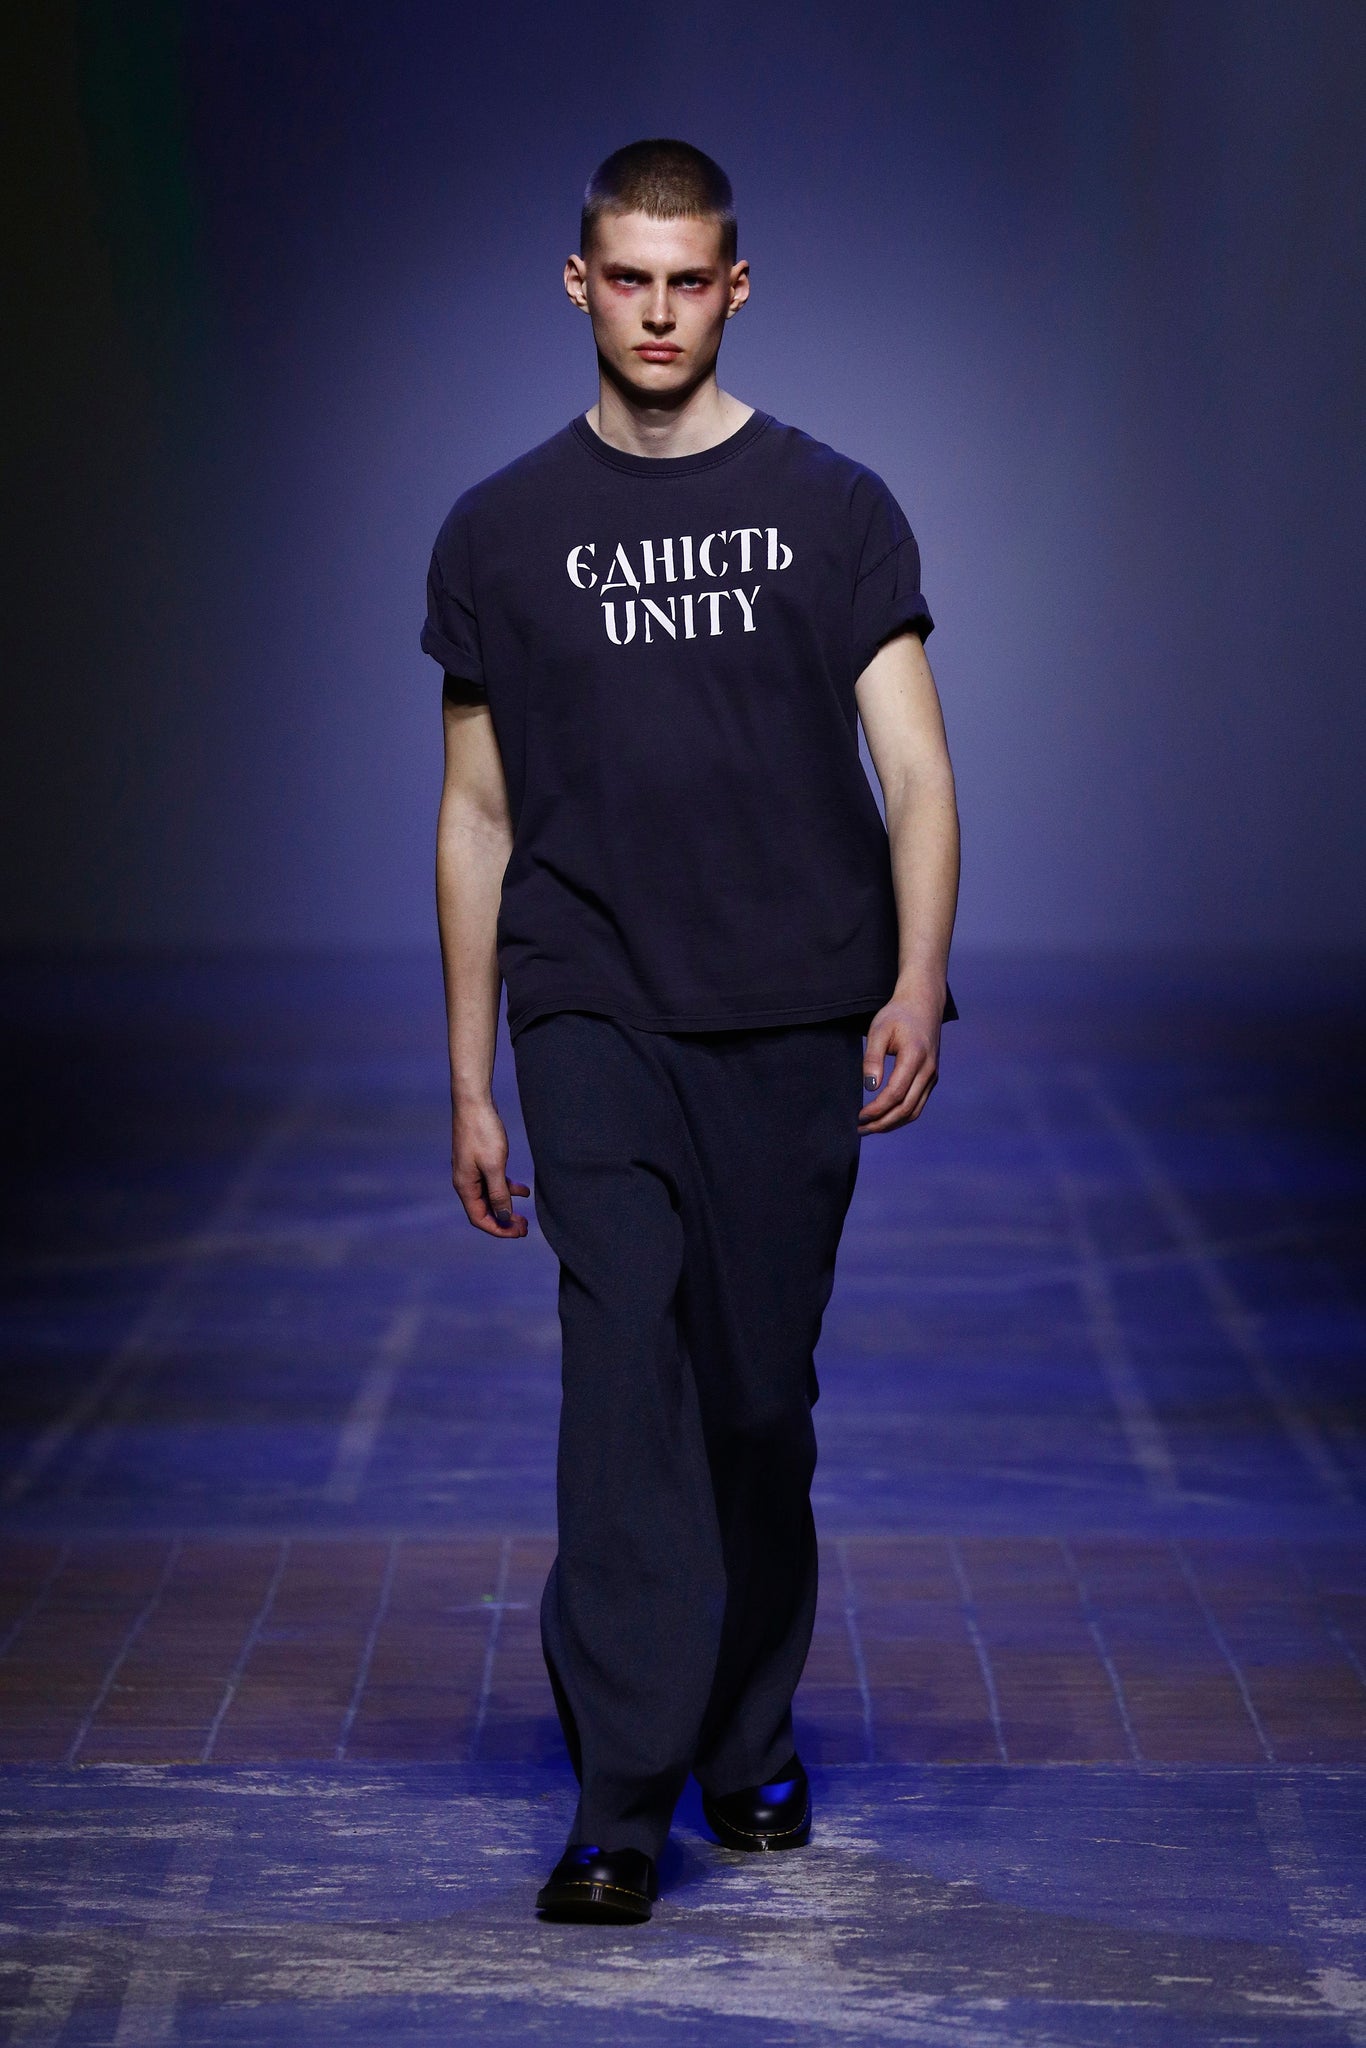 Unity T-Shirt and Pants Set